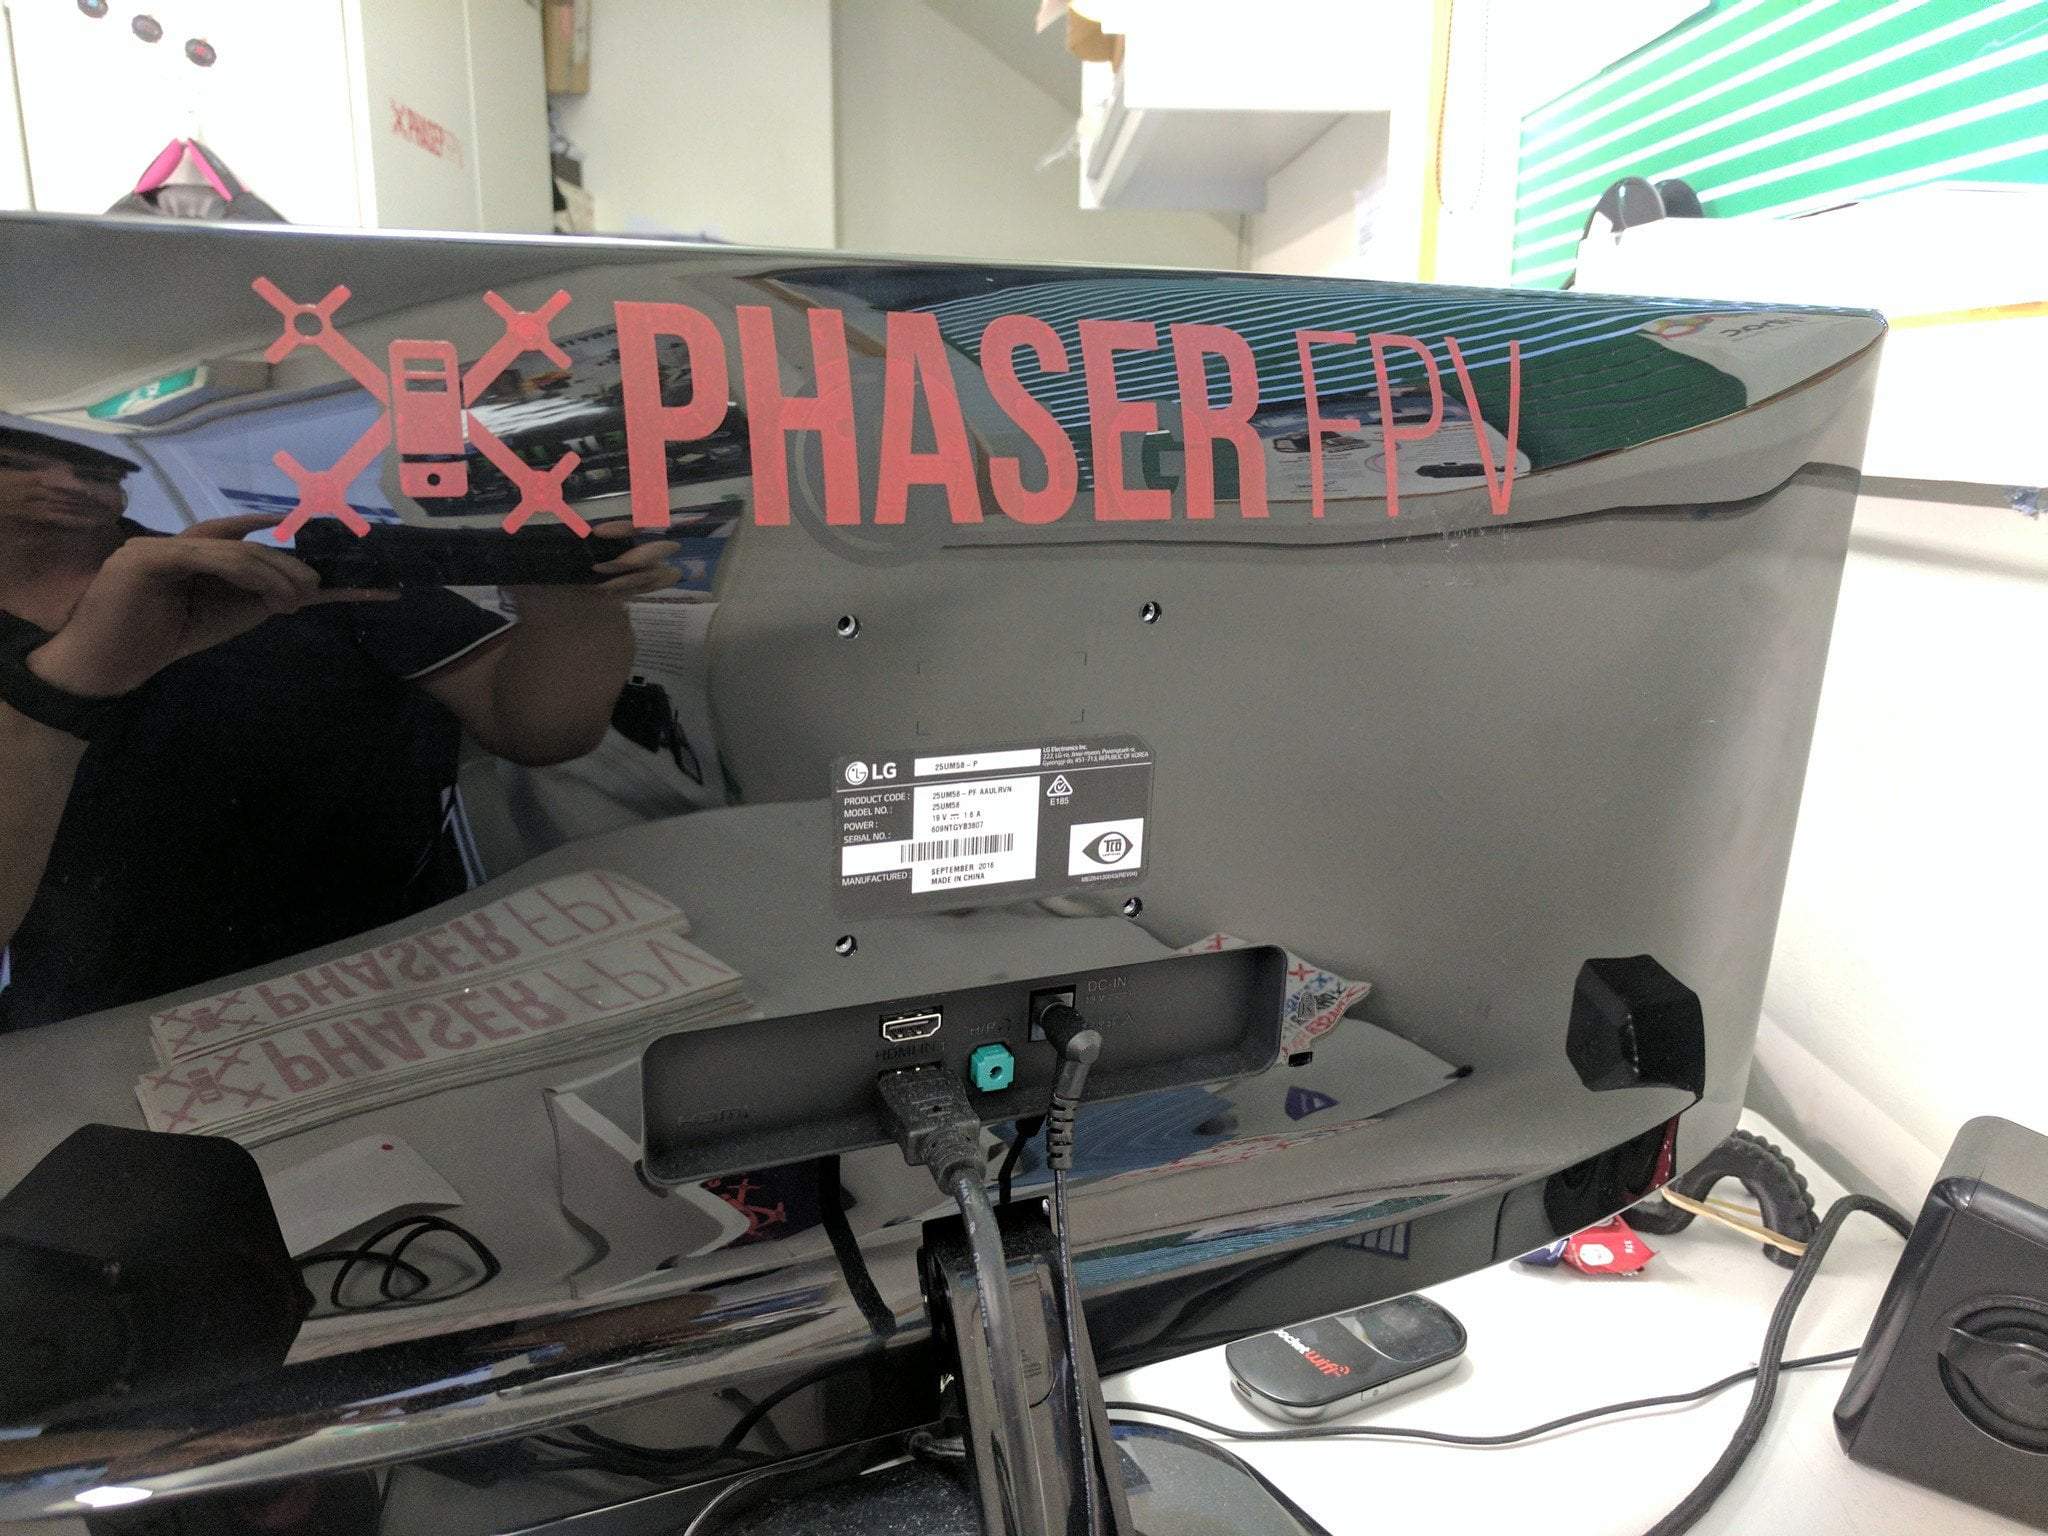 Phaser FPV Transfer Stickers 300mm x 50mm